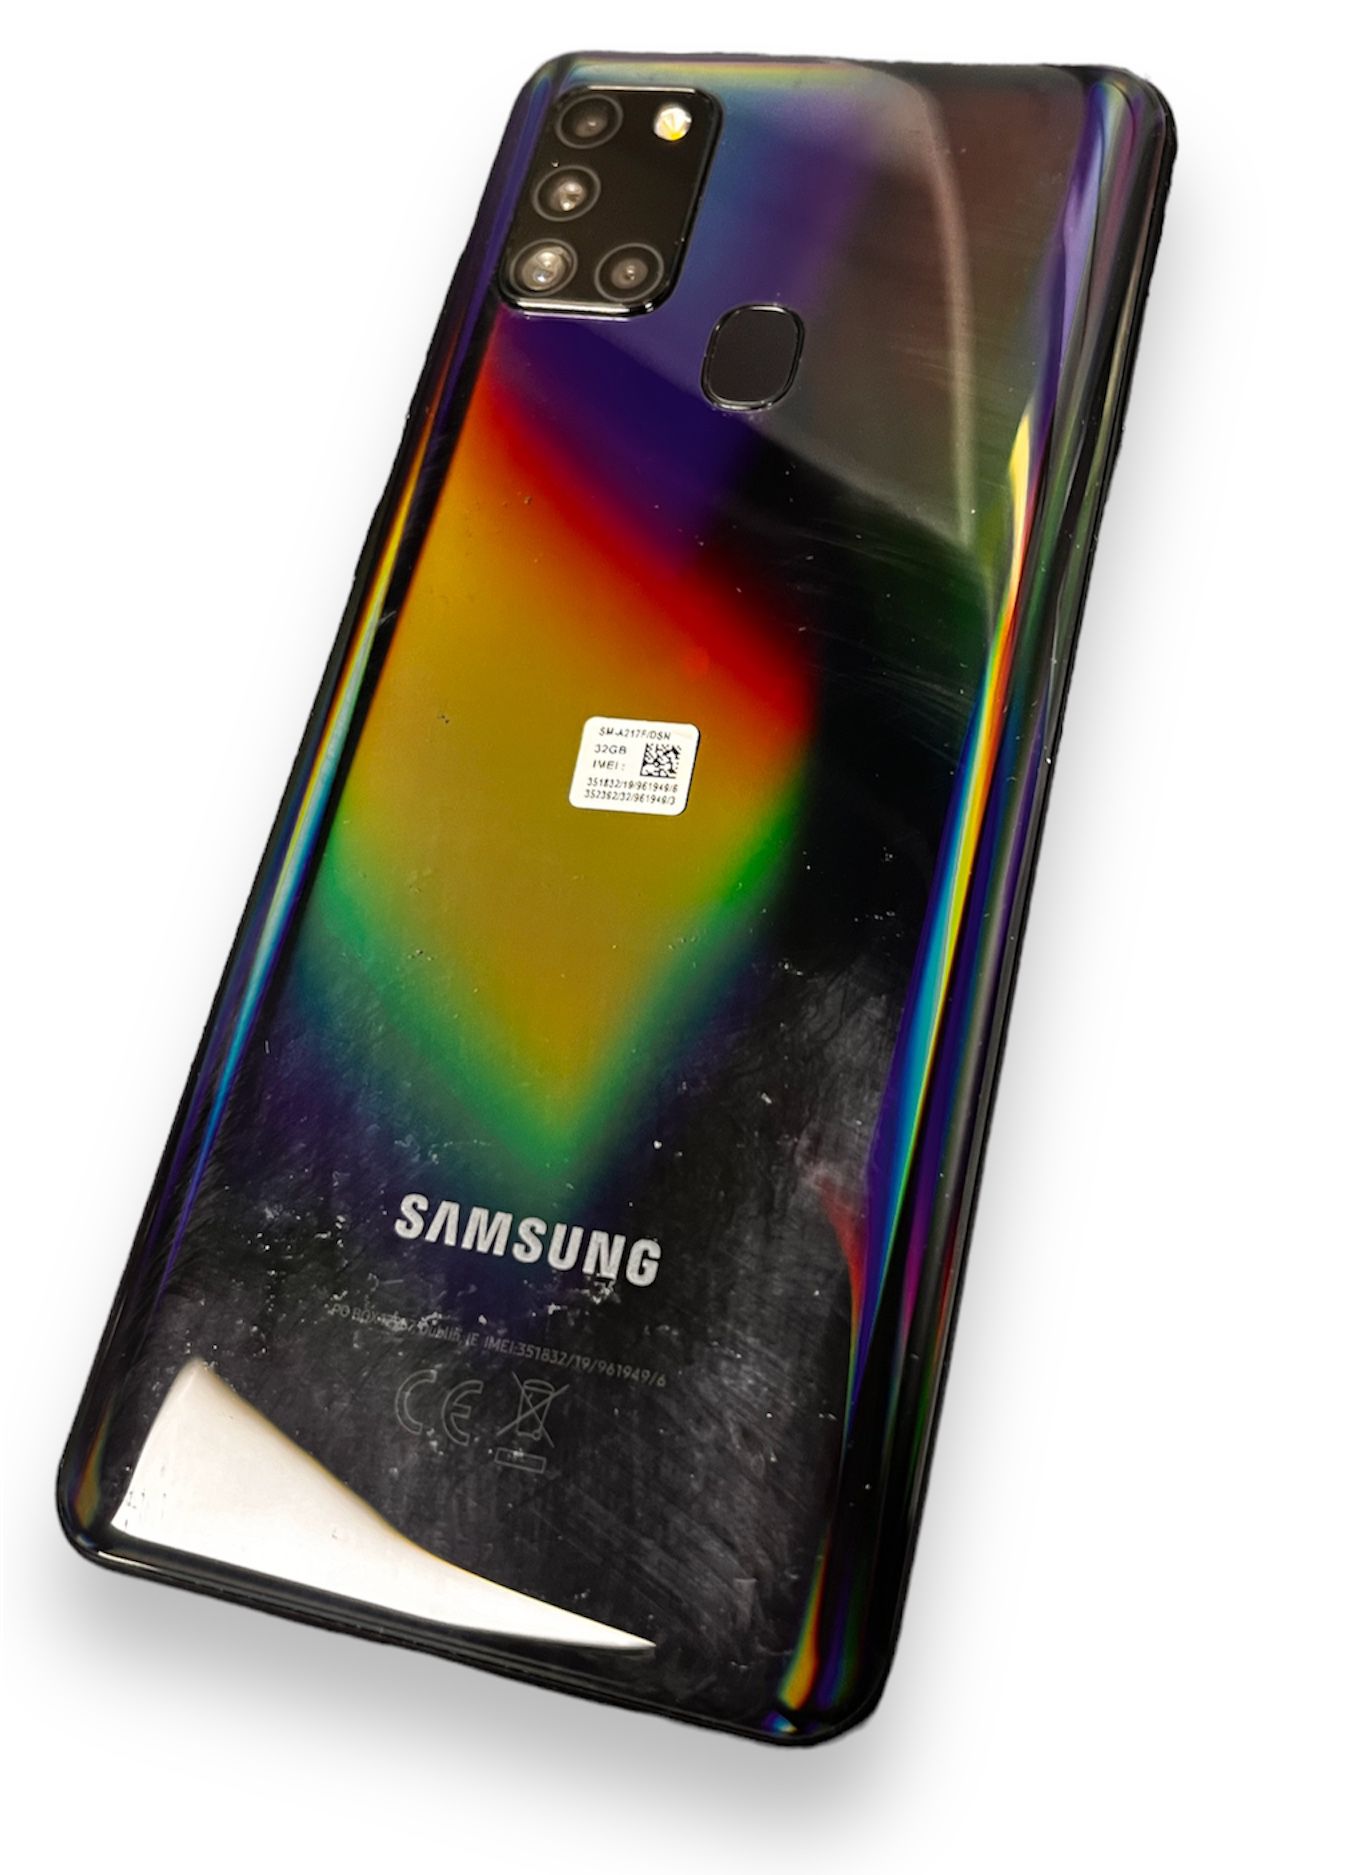 Samsung a21s 32gb - black iridescent